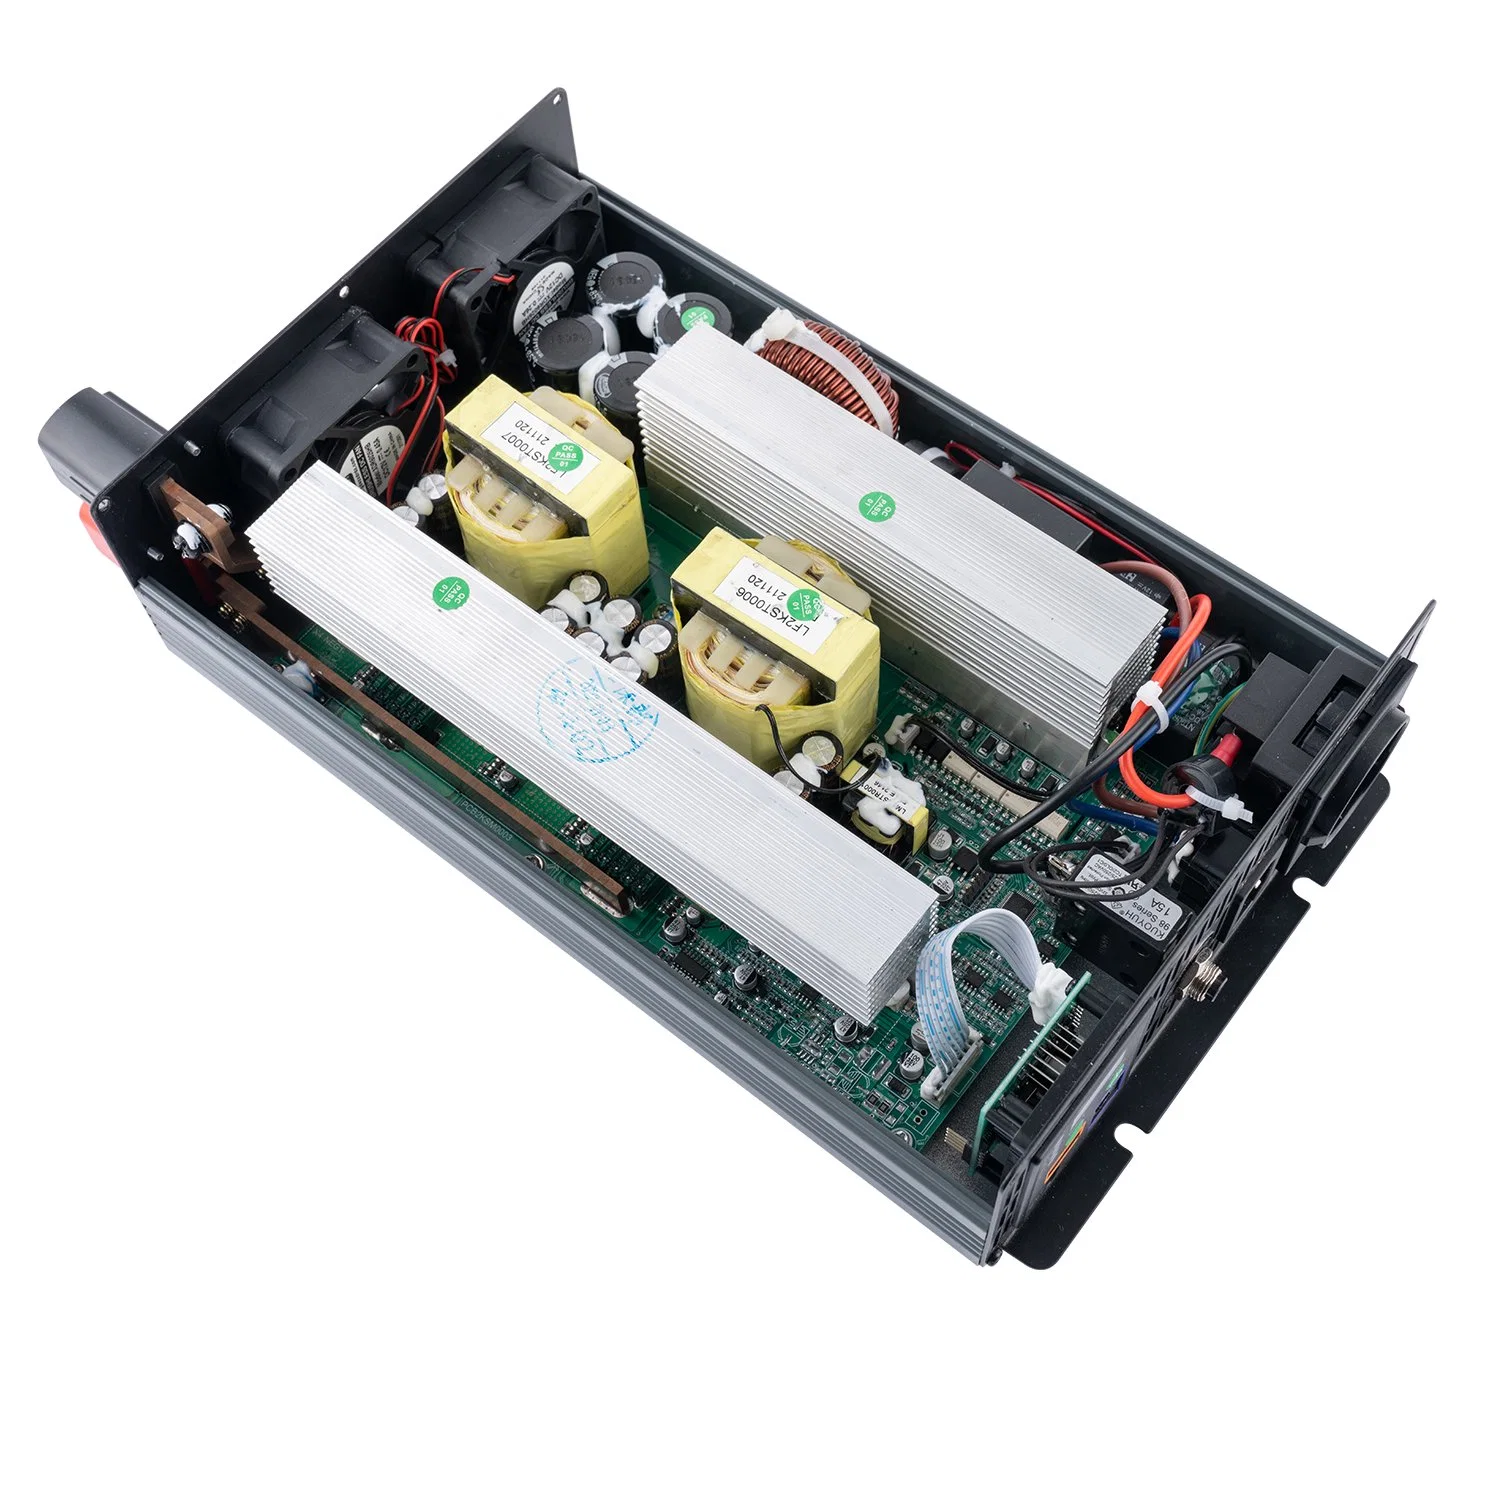 Yassion 2500W Pure Sine Wave Inverter DC 12V/24V to AC 110/230V off Grid Solar Power Inverter with CE, RoHS, E-MARK Certificate